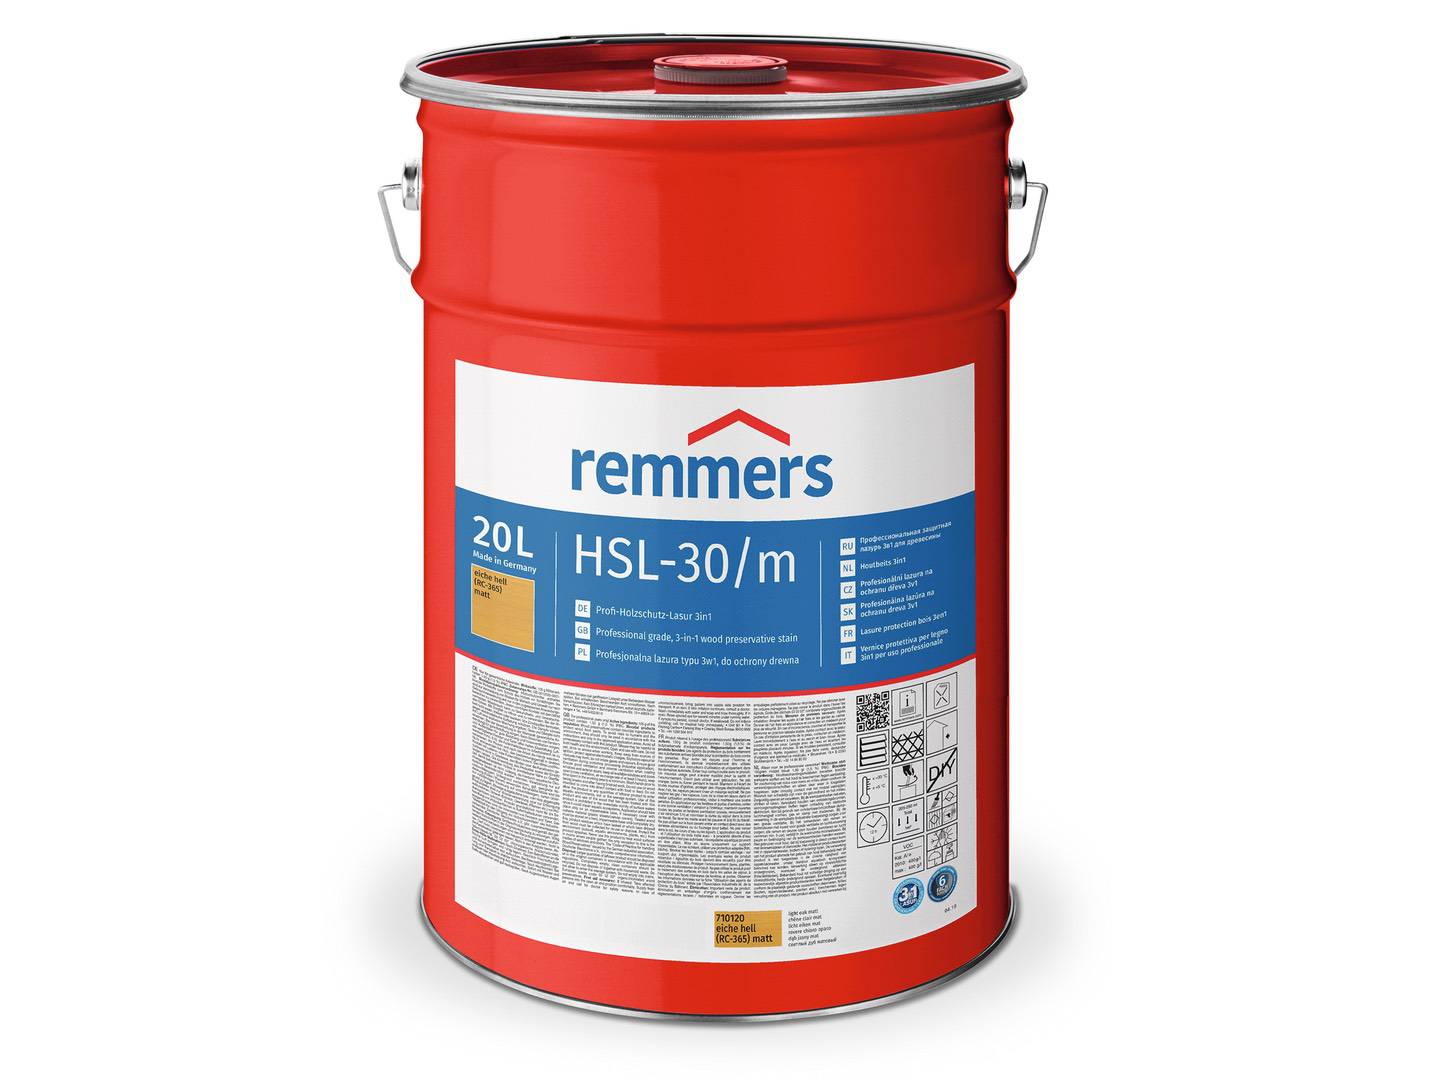 REMMERS HSL-30/m-Profi-Holzschutz-Lasur 3in1 platingrau (FT-26788) matt 20 l